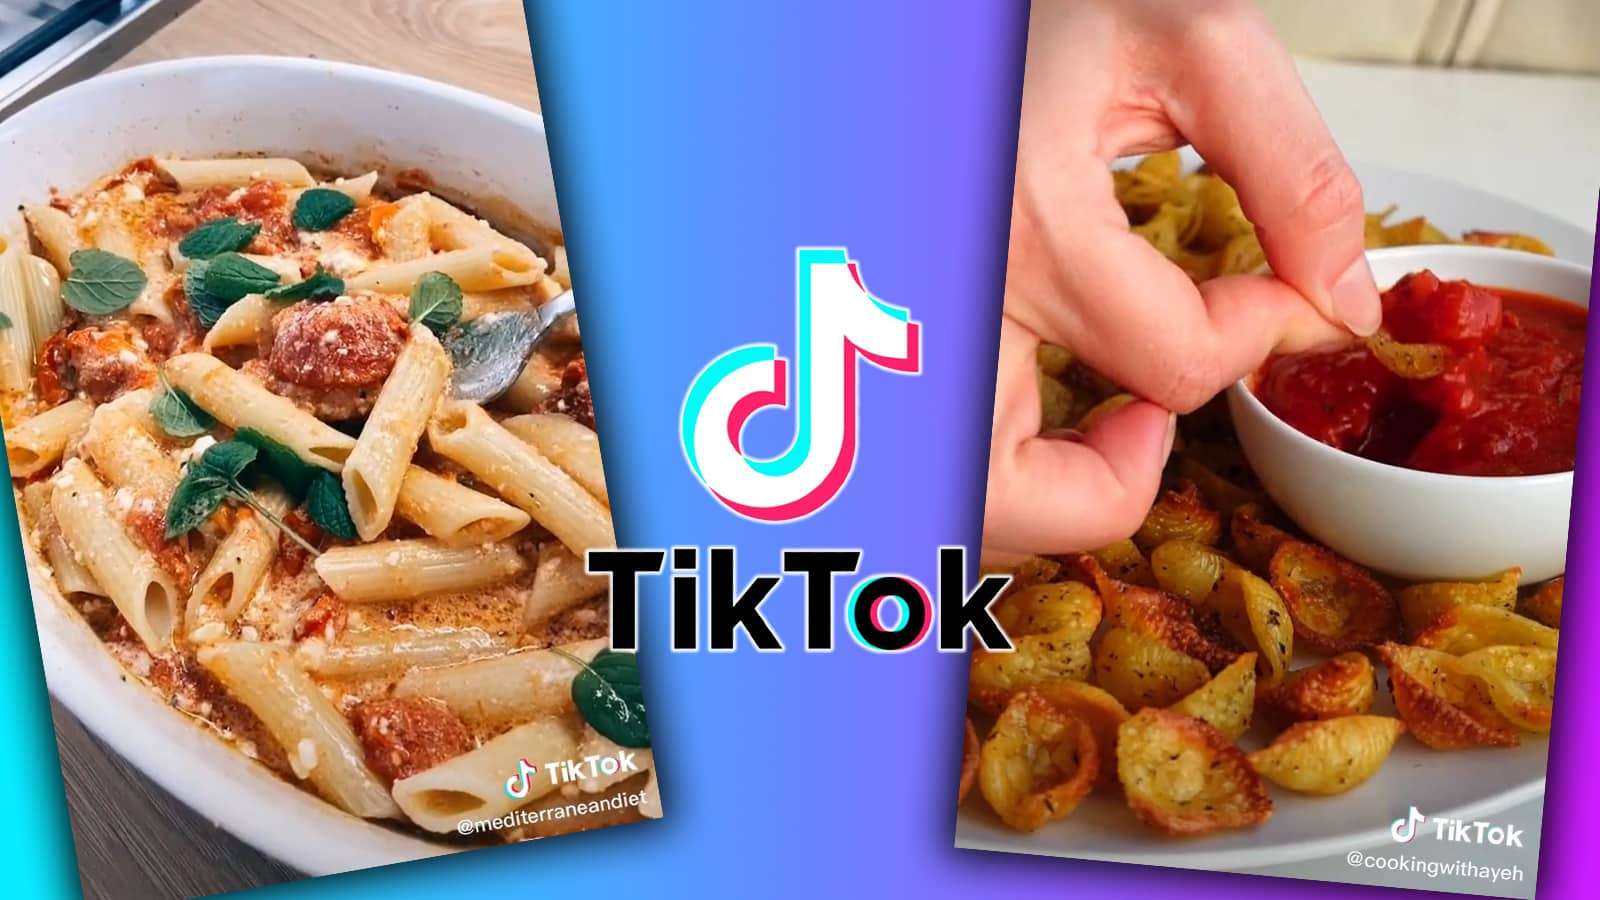 TikTok is opening restaurants to sell viral food - Dexerto